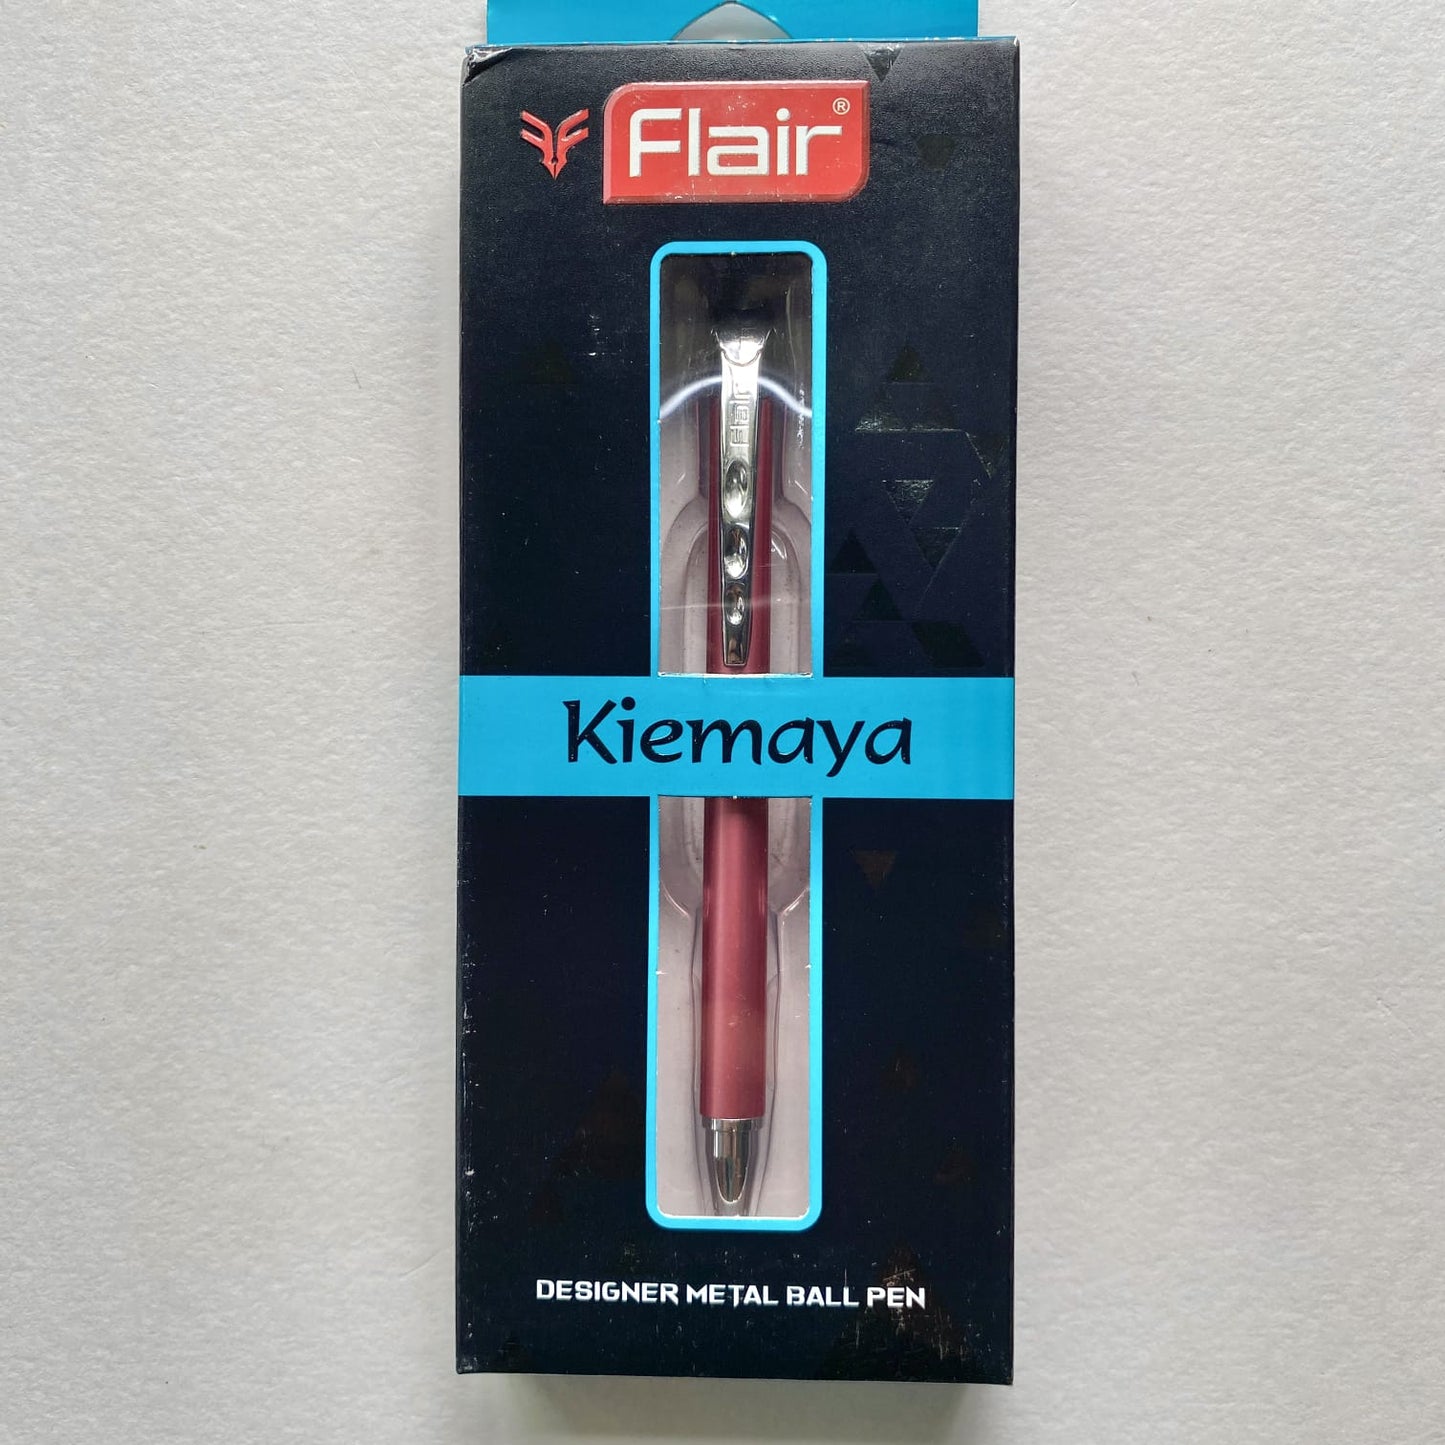 Flair Kiemaya Ball Pen | Metallic Body | Body Color: Metallic Peach | Ink Color: Blue